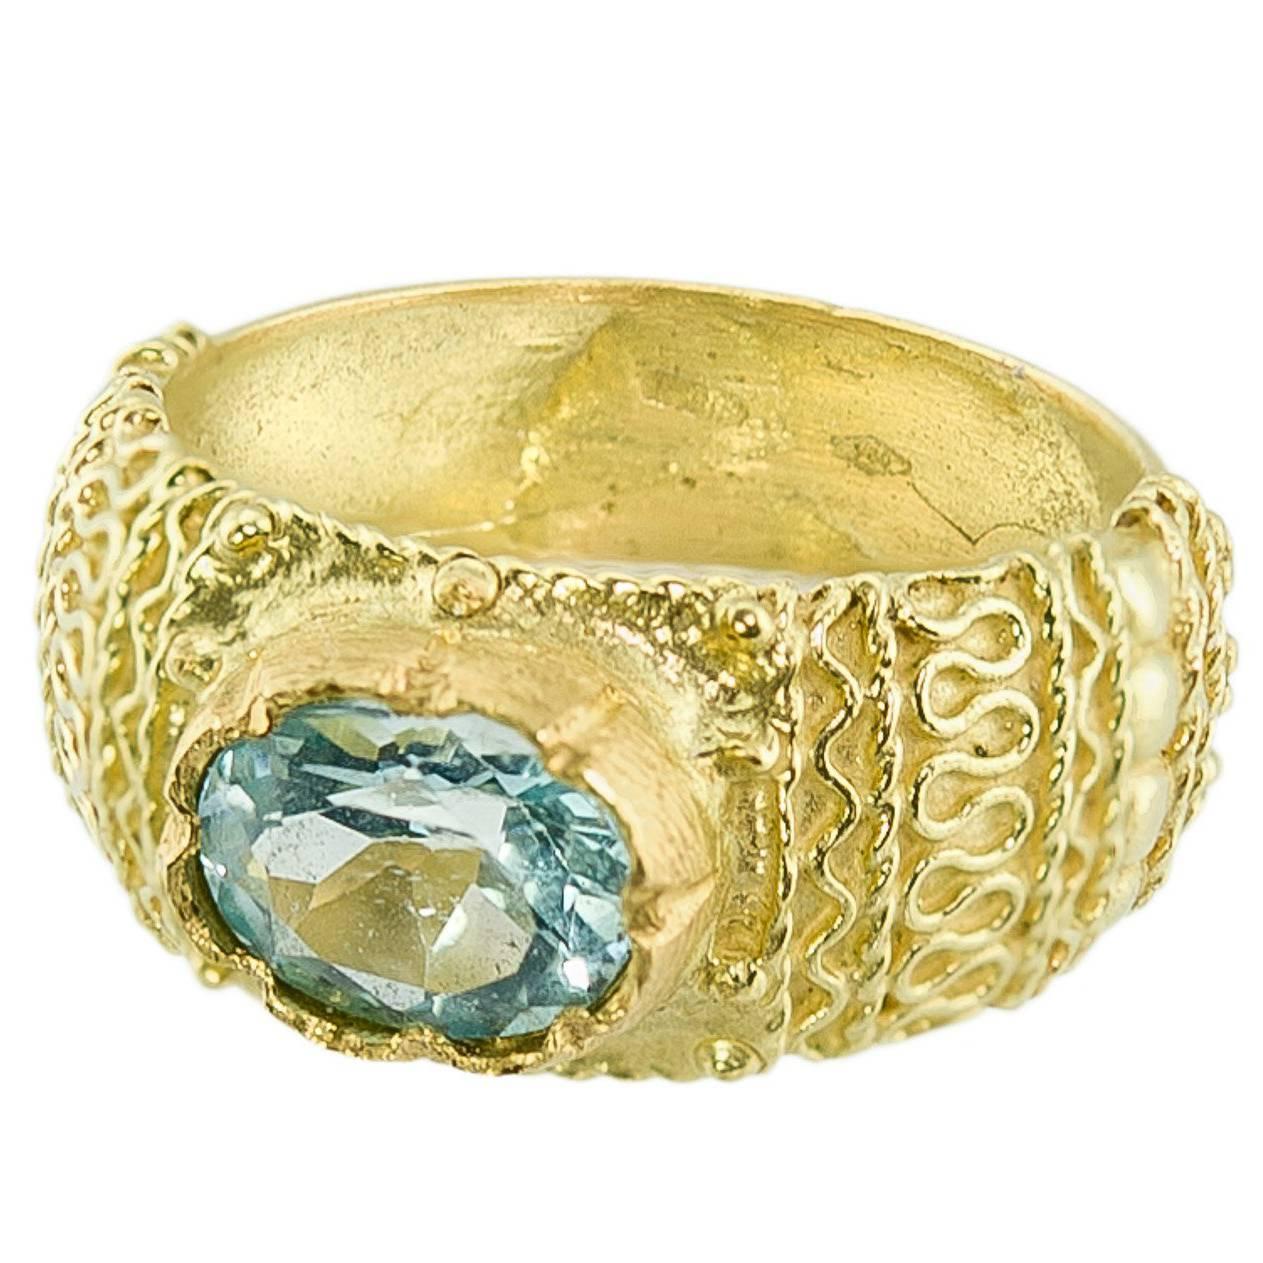 Alessandro Dari Gioielli Blue Topaz Gold Florentine Style Ring